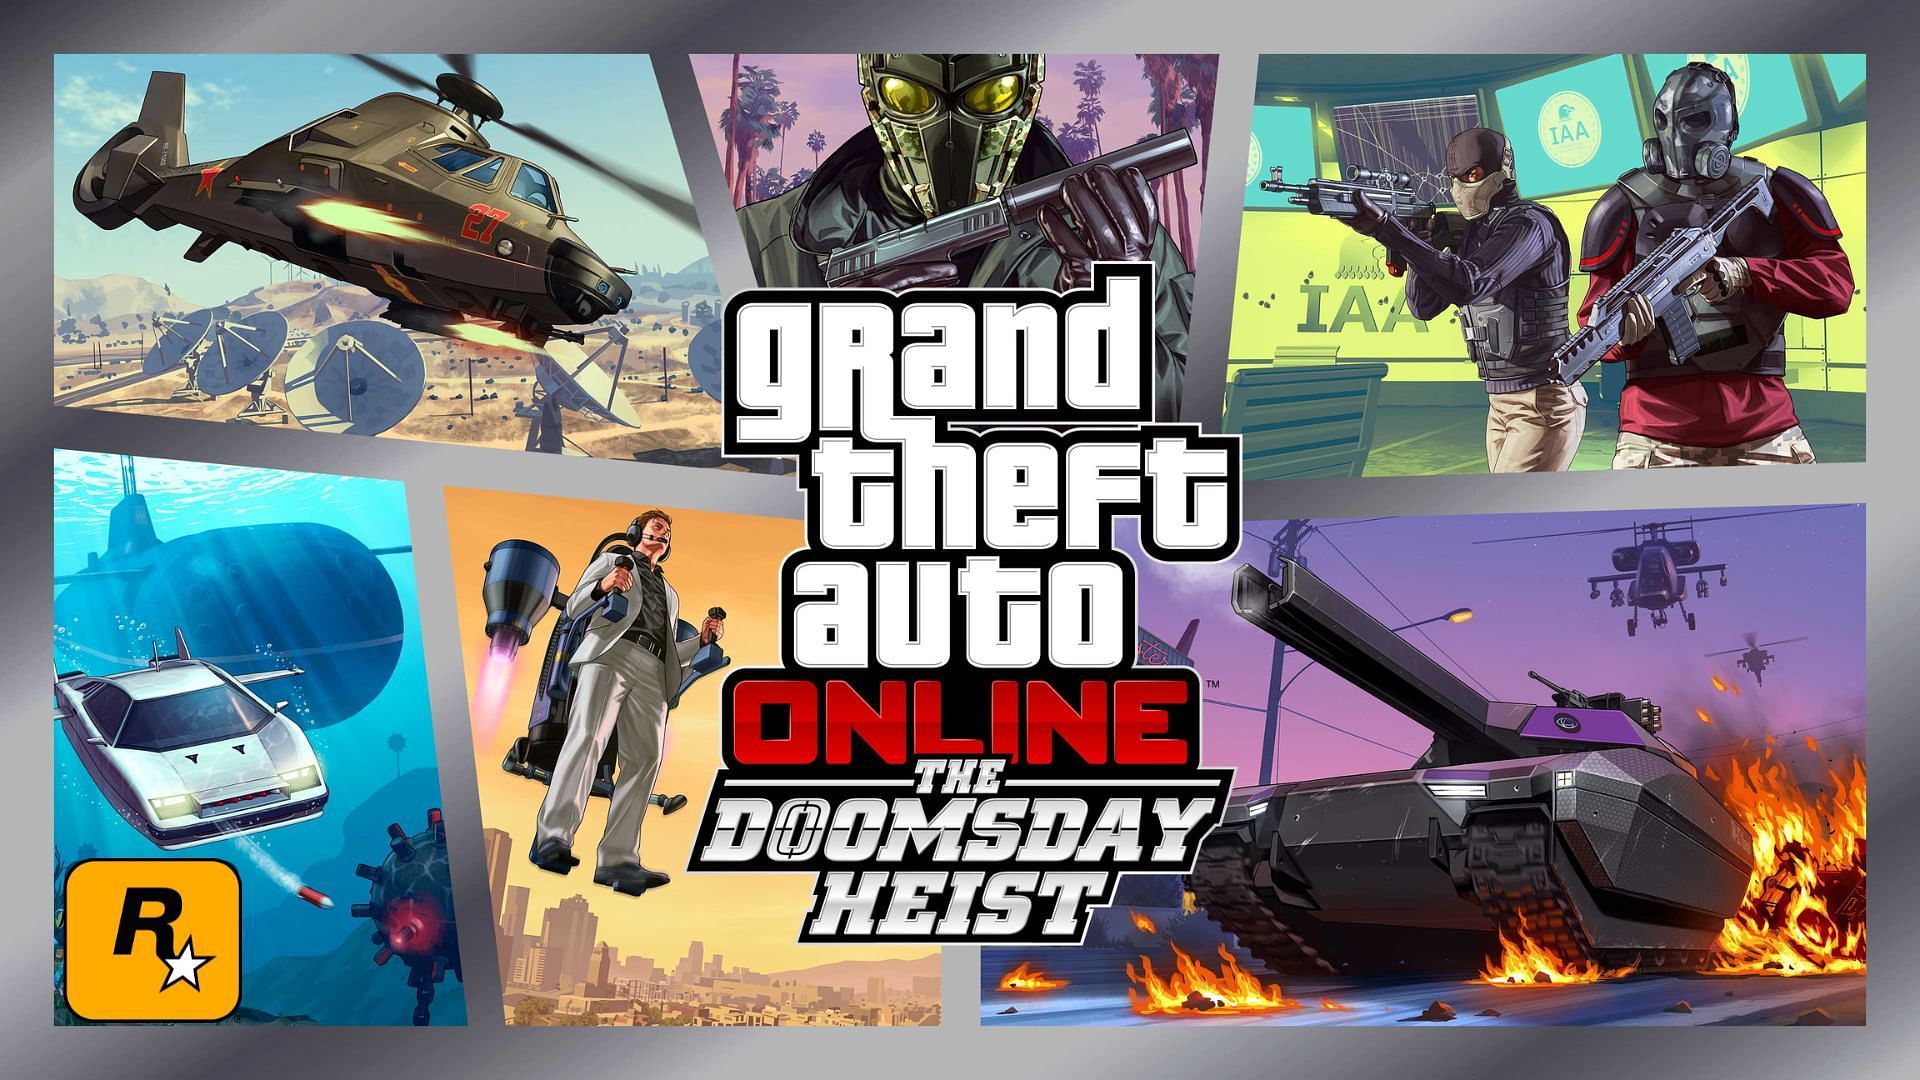 GTA Online Doomsday Scenario Community Challenge leaks ahead of its official release